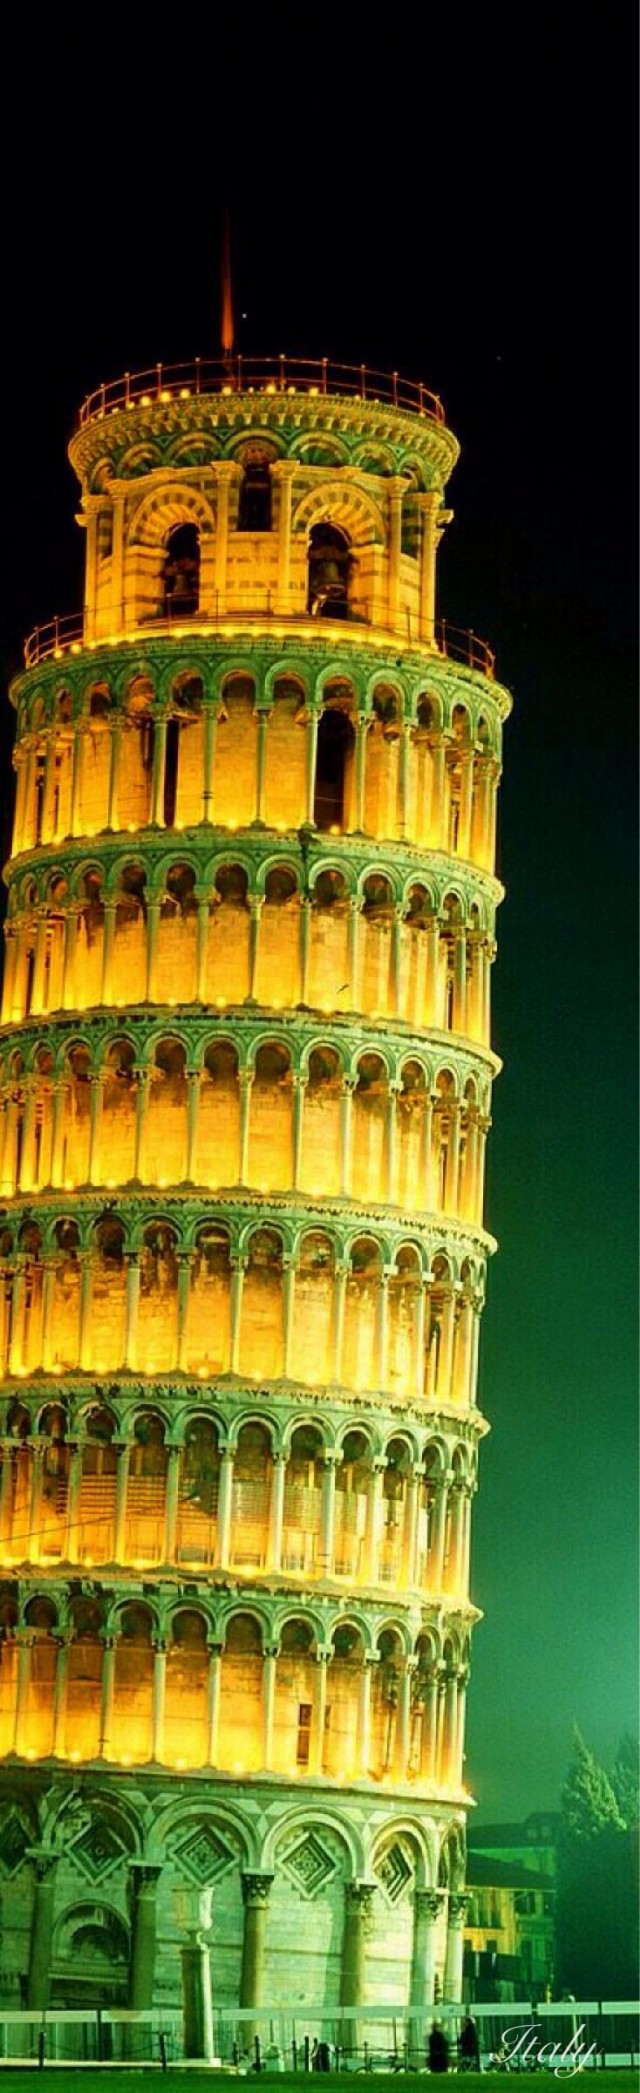 He Made Me Climb The Steps Of Pisa